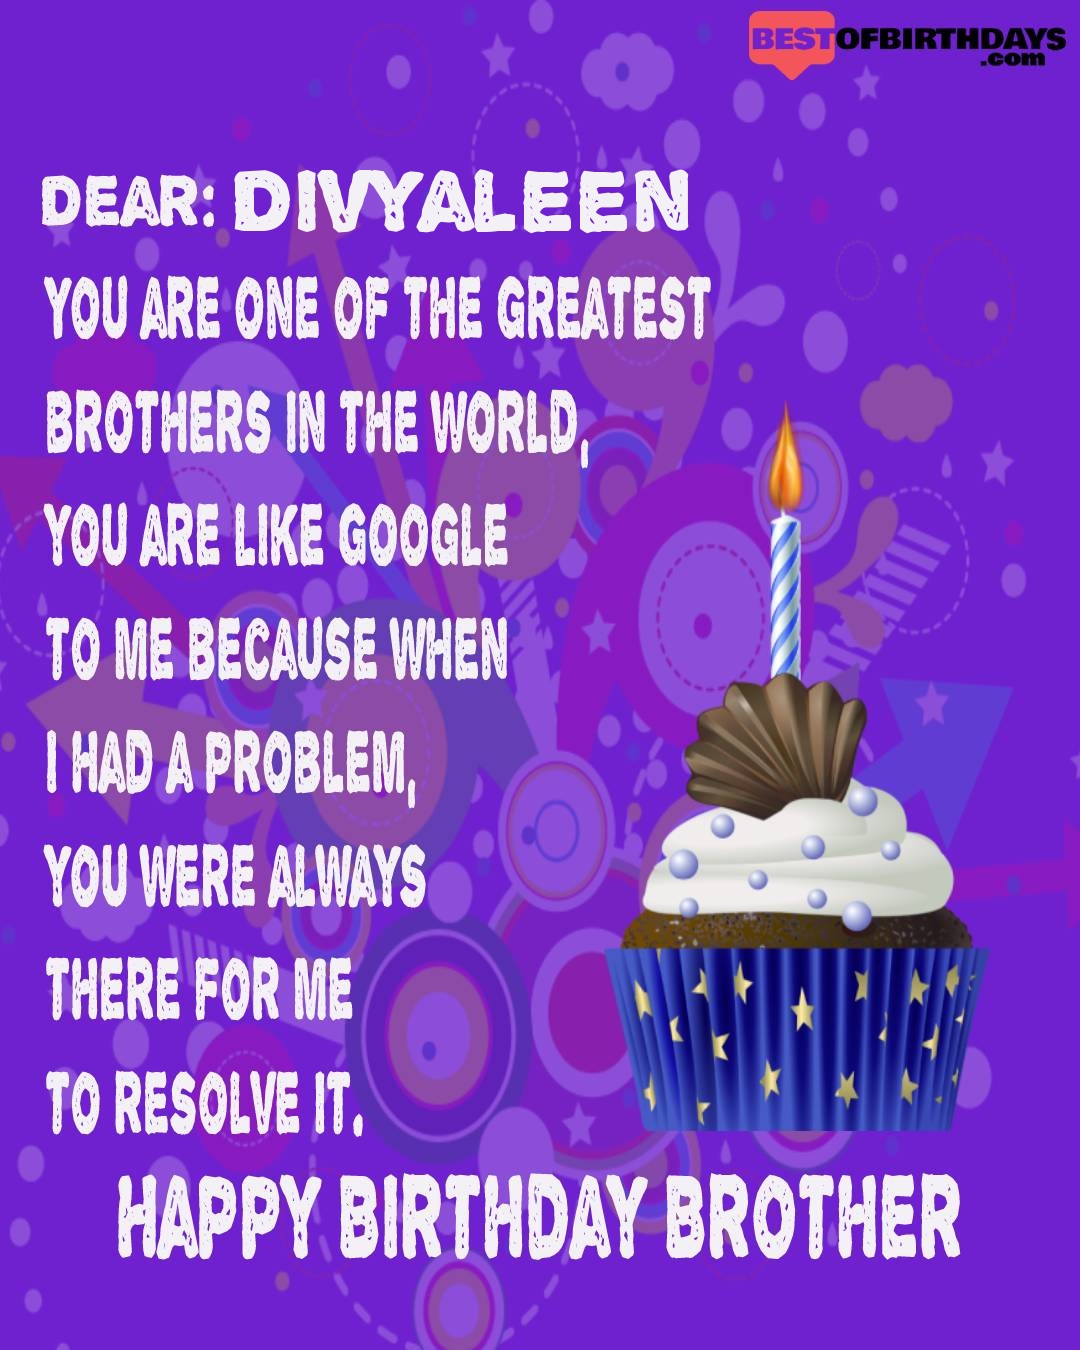 Happy birthday divyaleen bhai brother bro